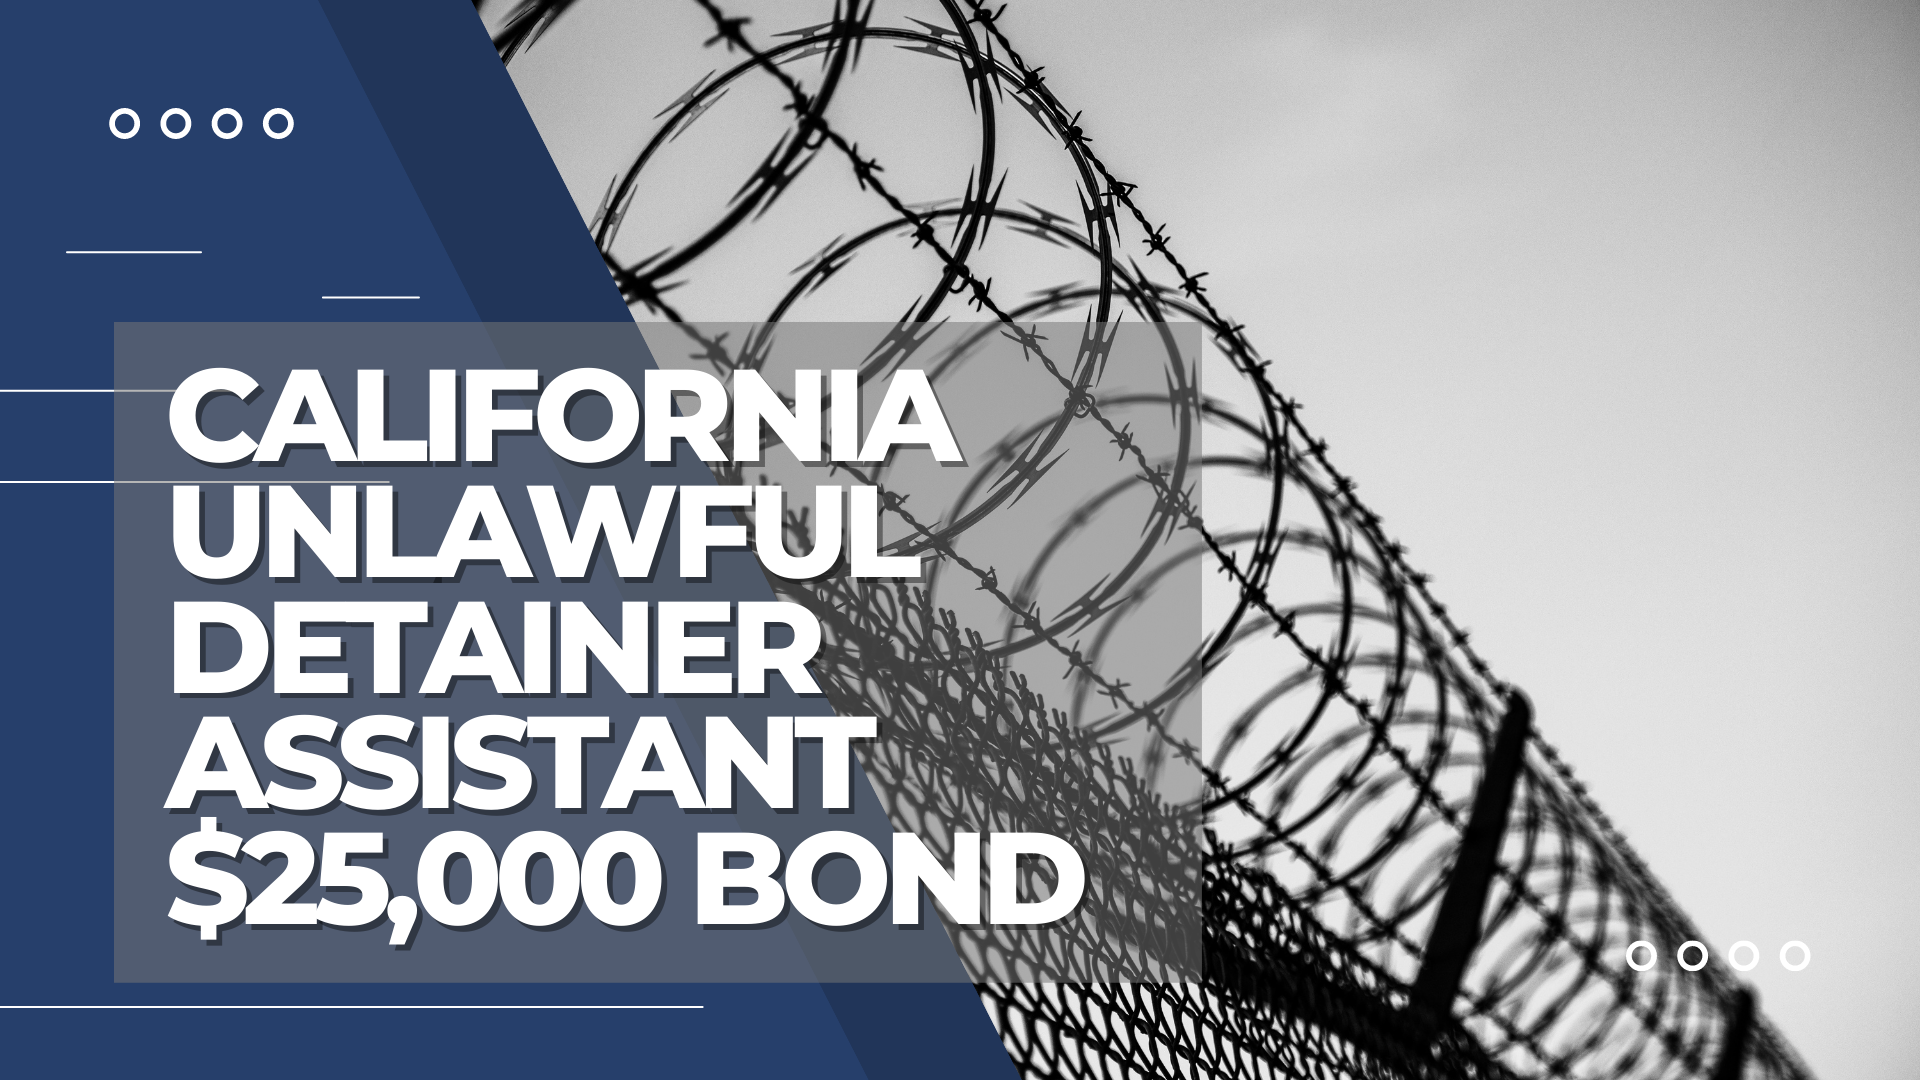 Surety Bond-California Unlawful Detainer Assistant $25,000 Bond